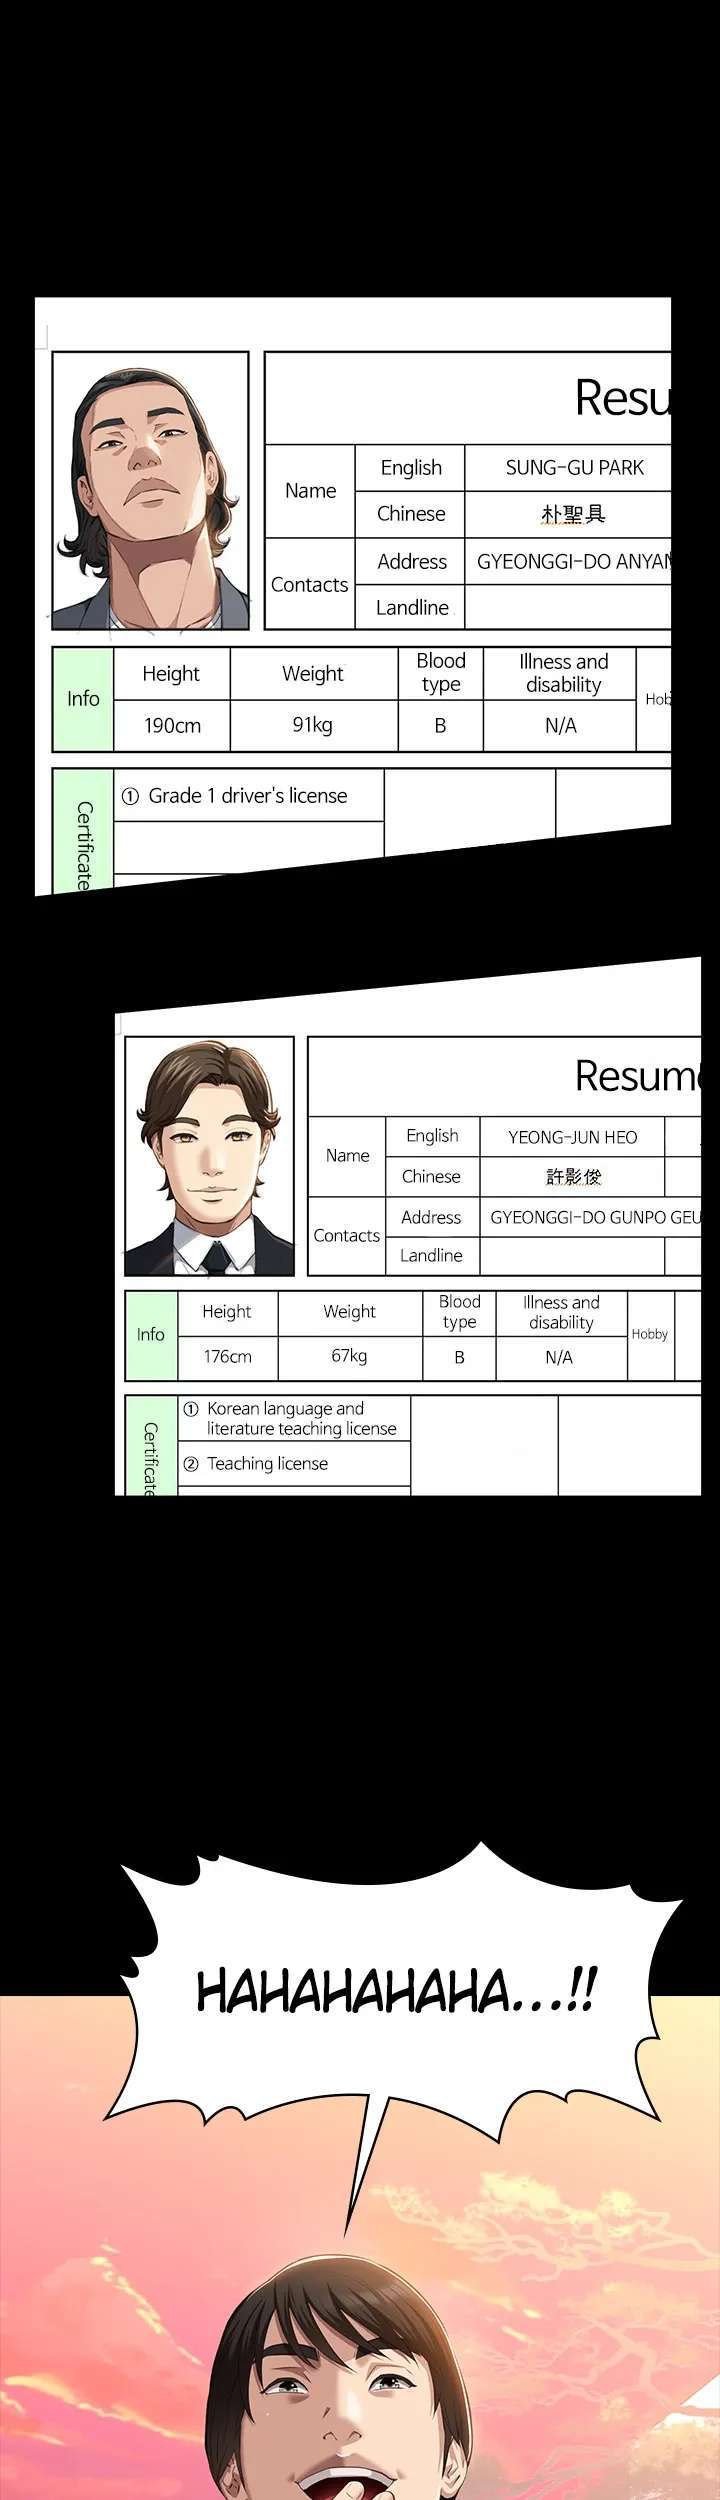 resume-chap-44-3